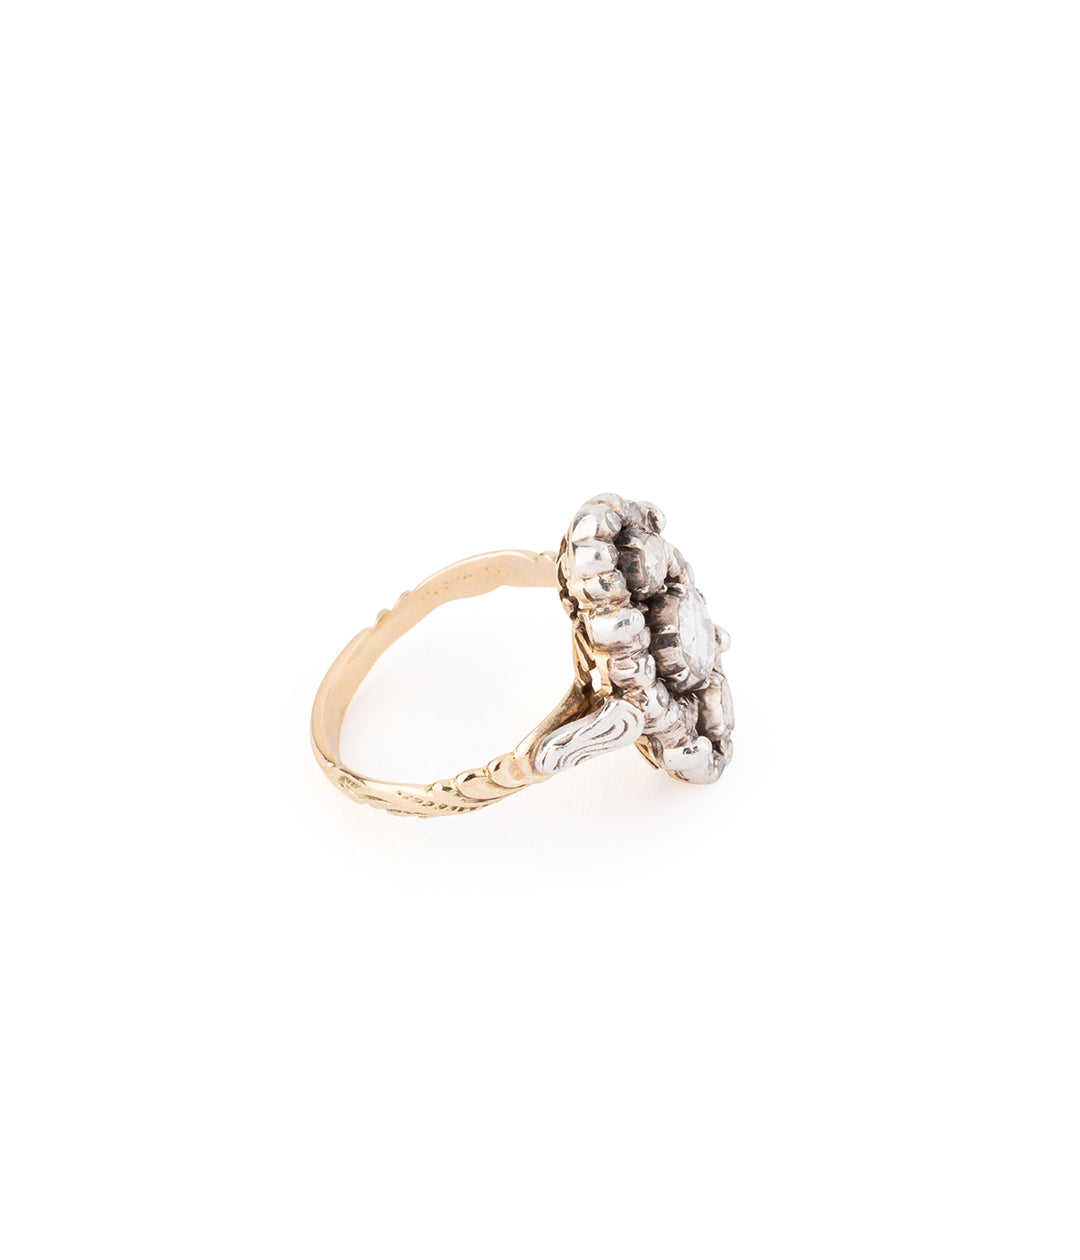 Antique diamond gold ring "Blane" - Caillou Paris